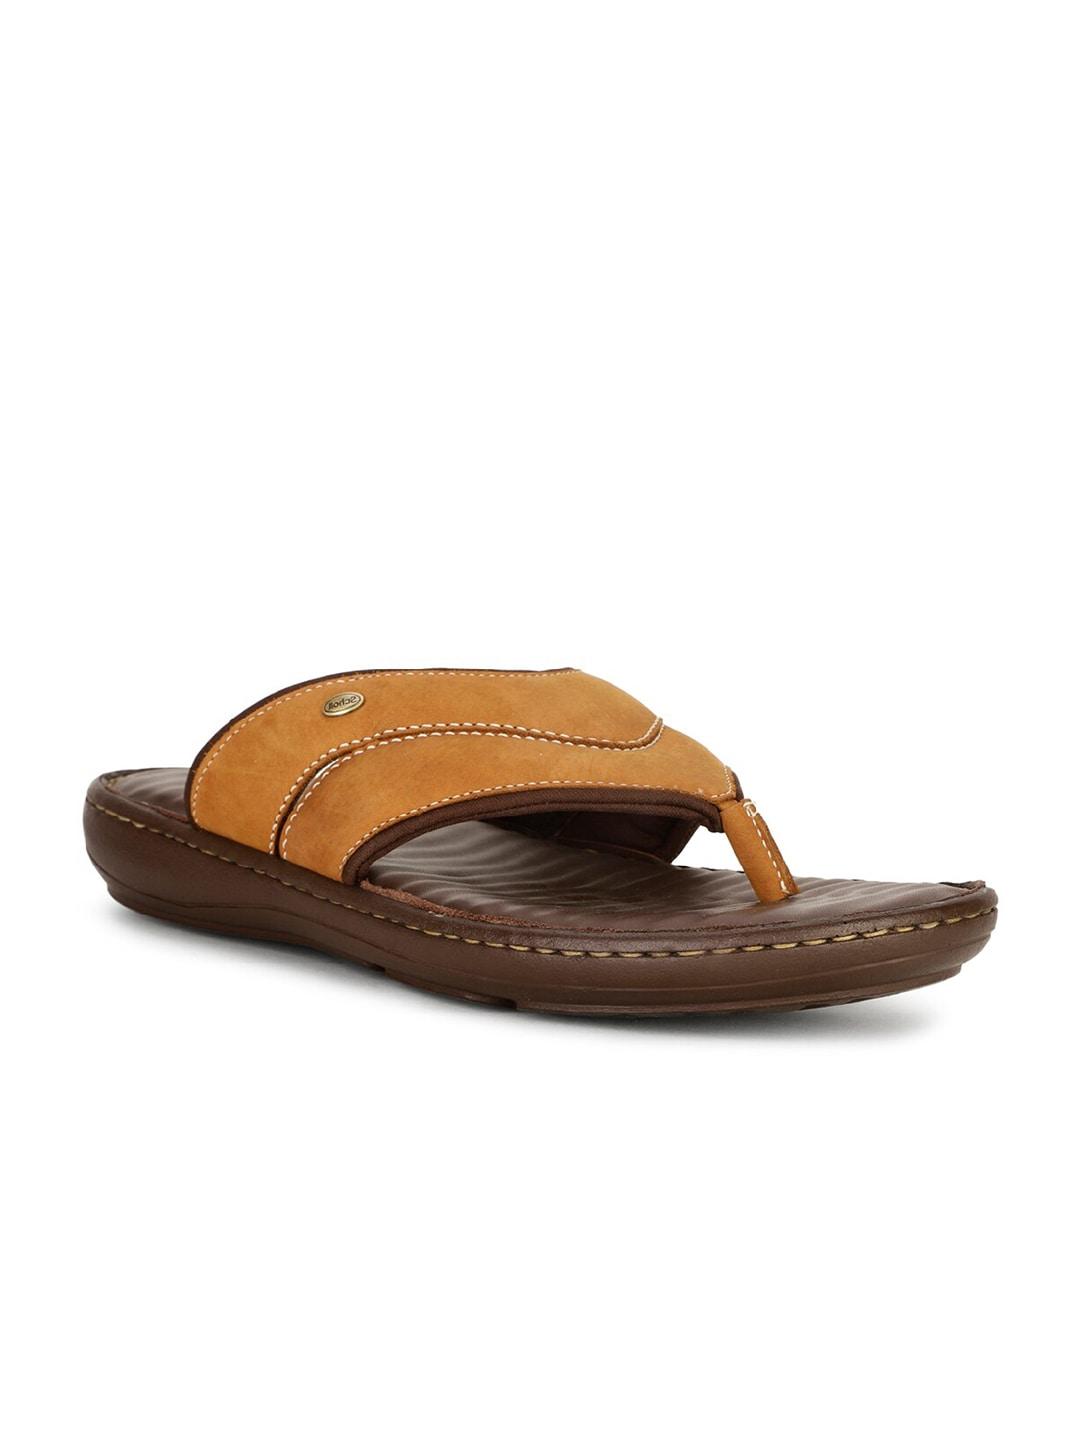 Scholl Leather Slip-On Comfort Sandals